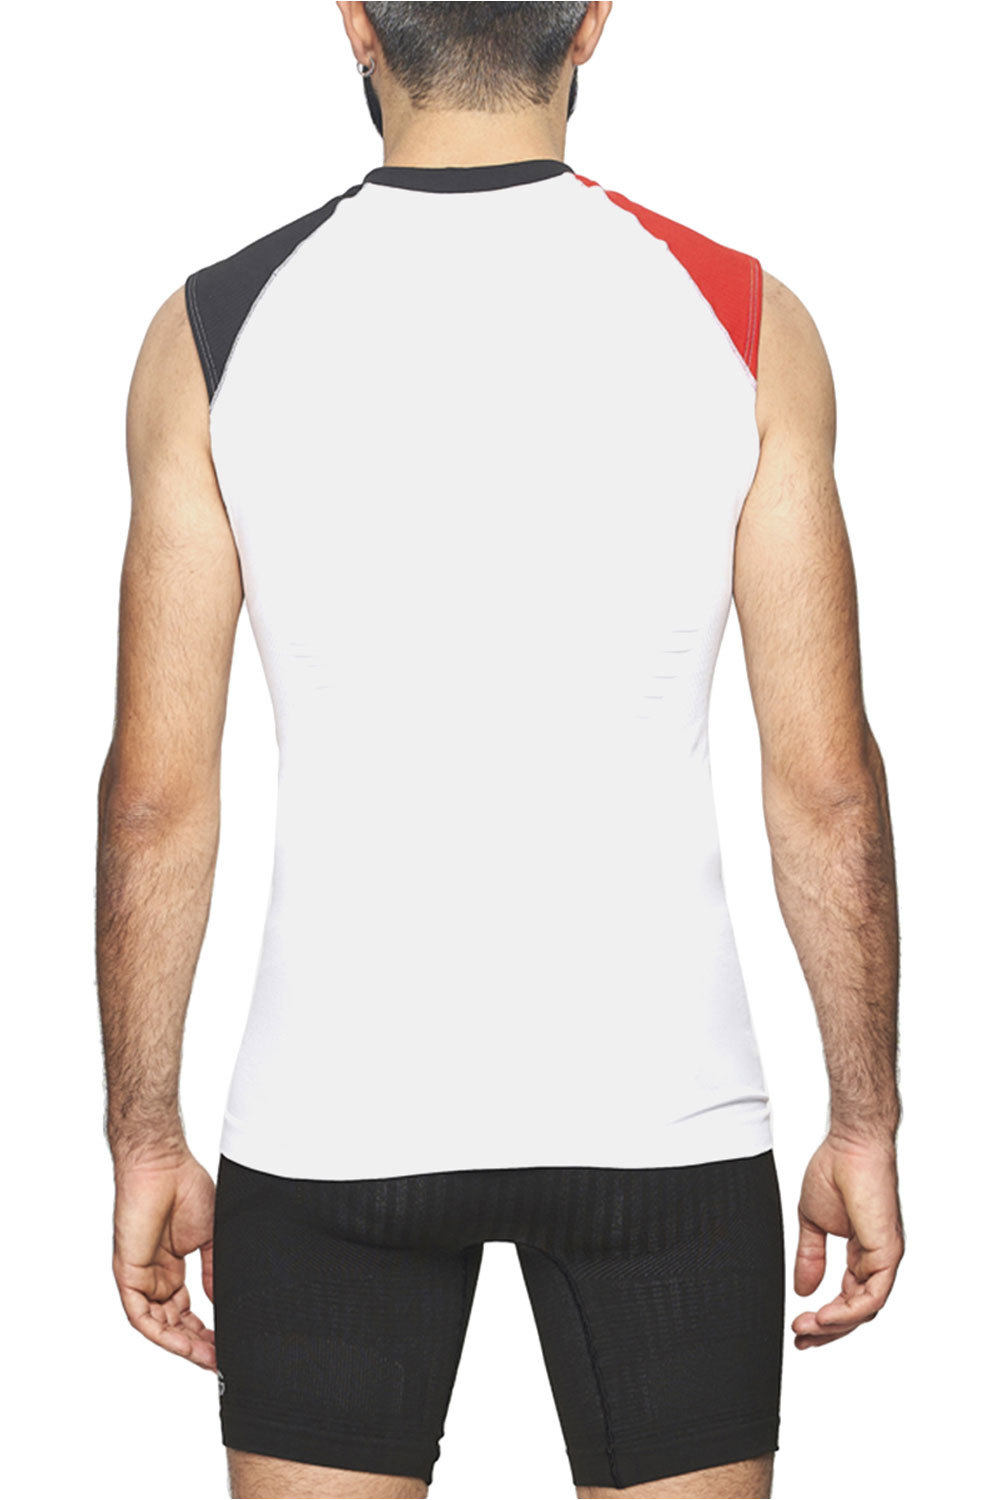 Sporthg camiseta entrenamiento sin mangas hombre PRO-TEAM AIR vista trasera